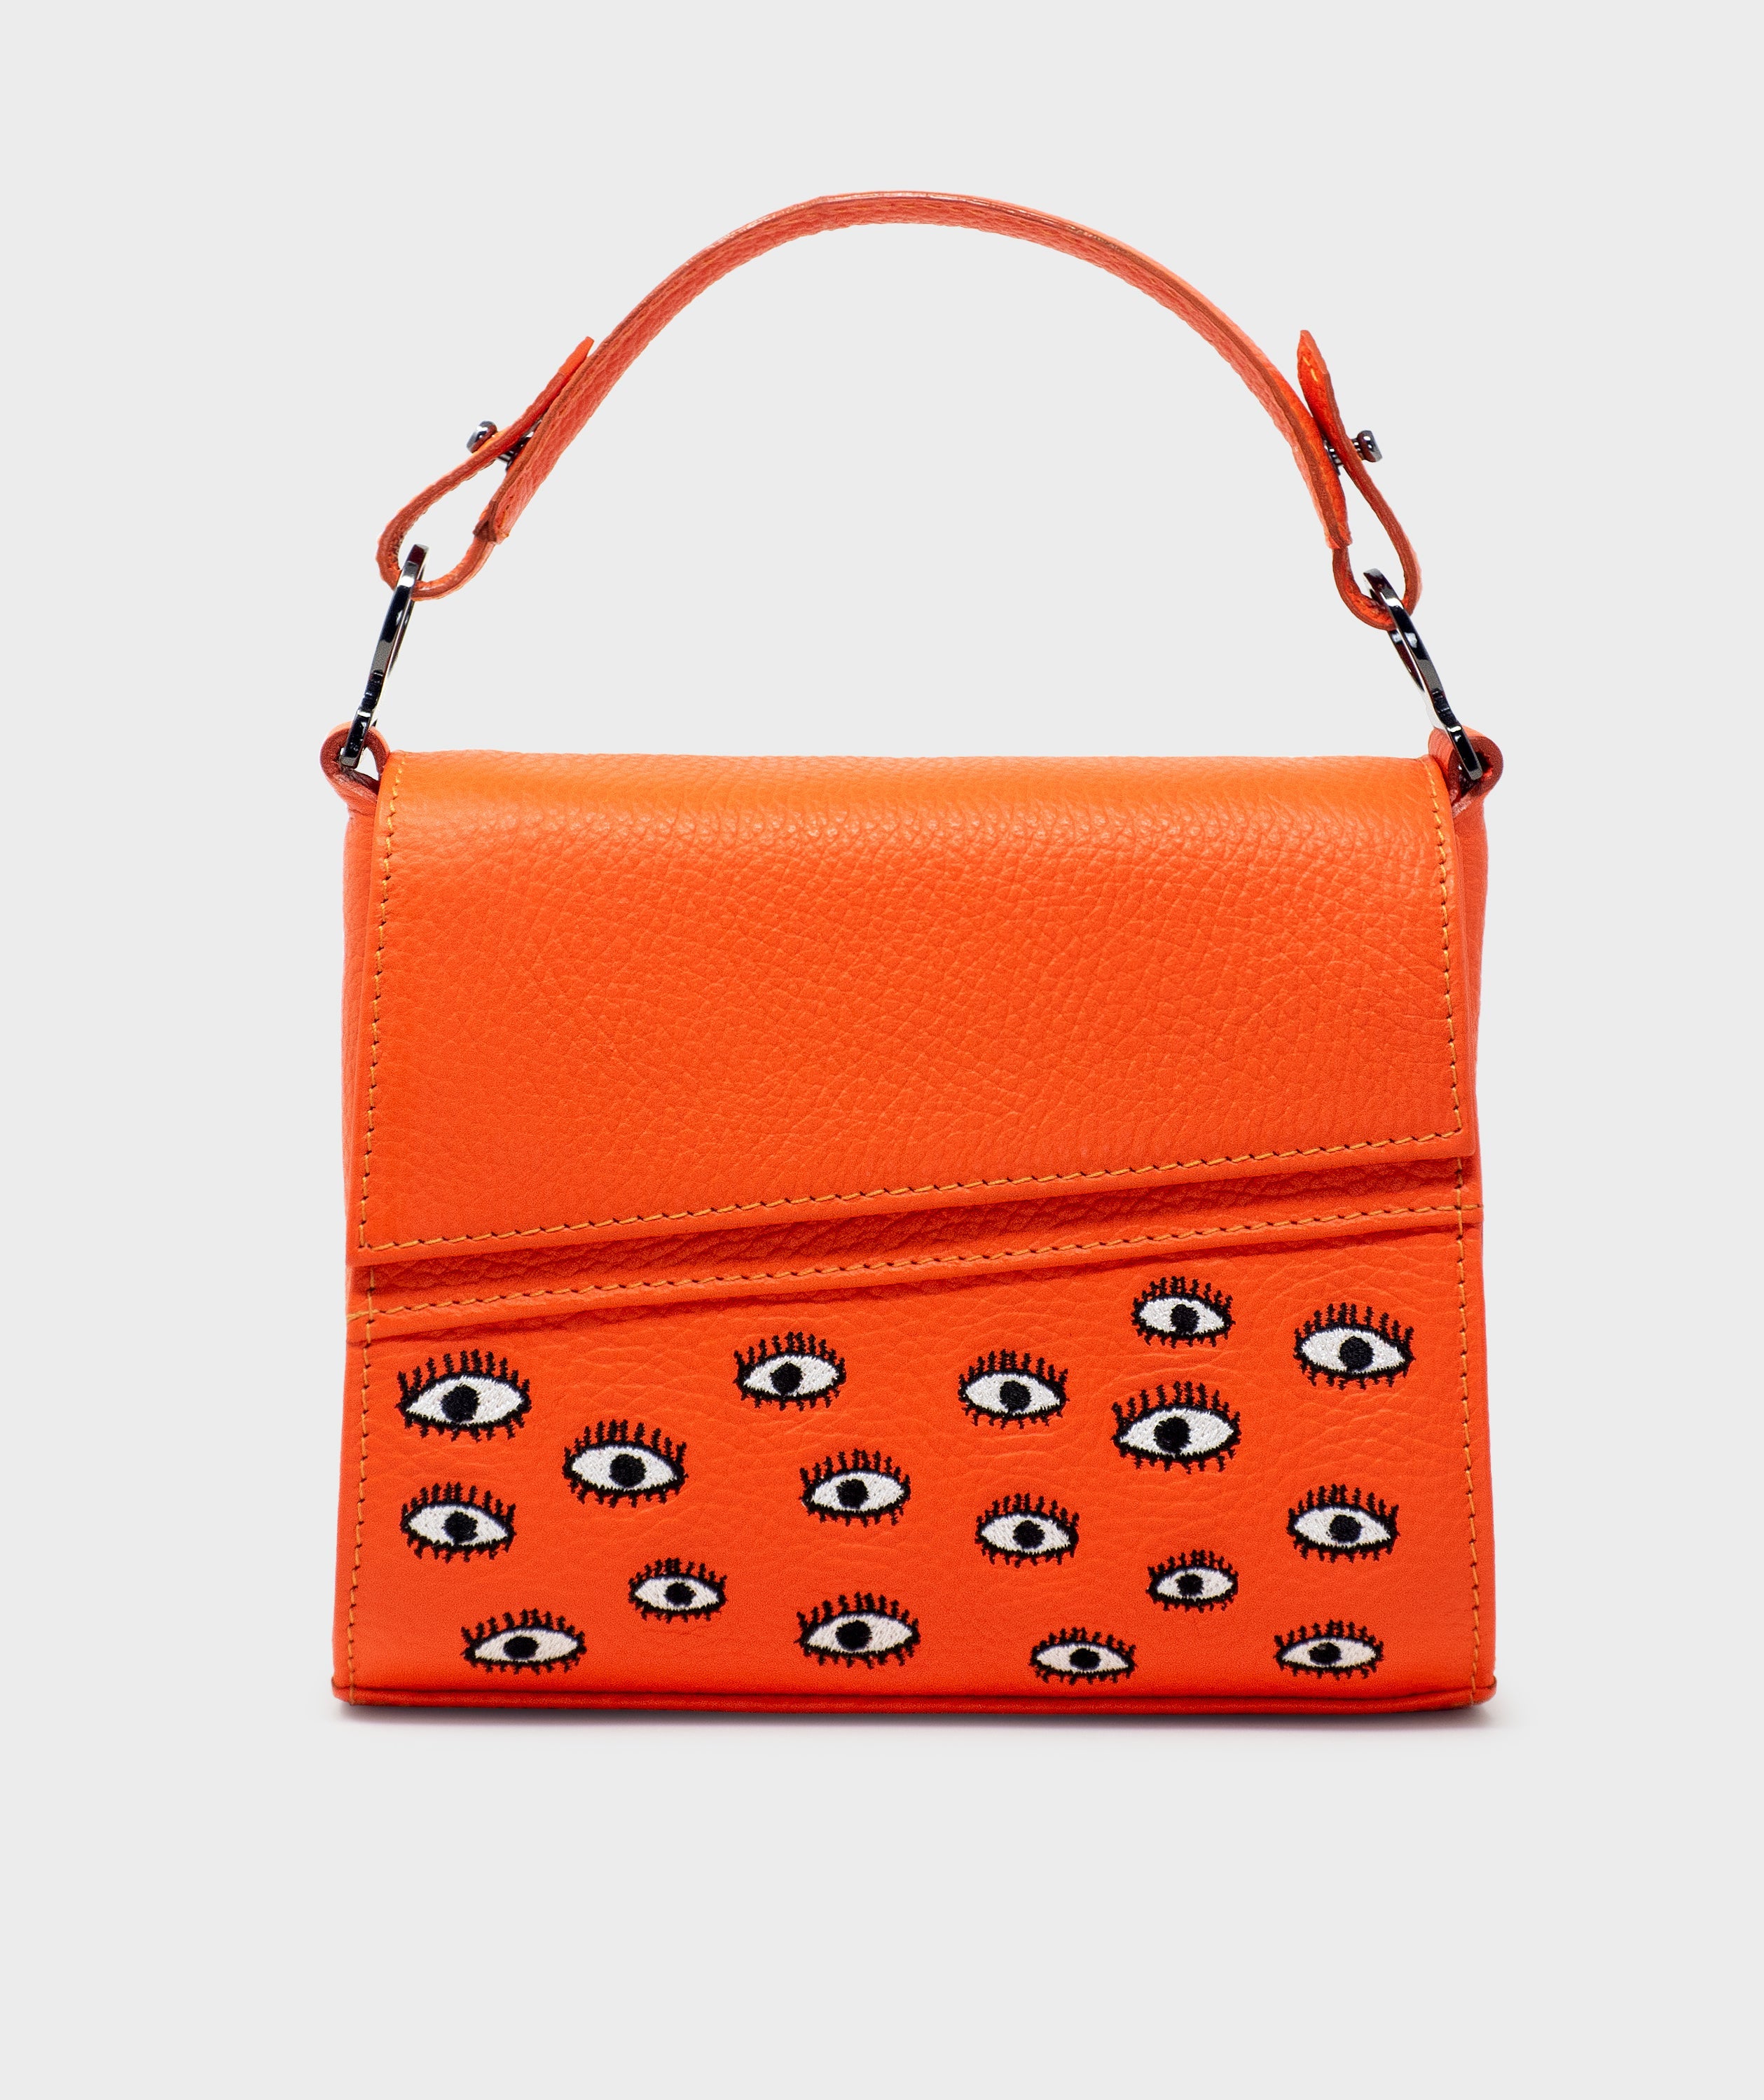 Anastasio Micro Crossbody Handbag Neon Orange Leather - Eyes Embroidery - Front view